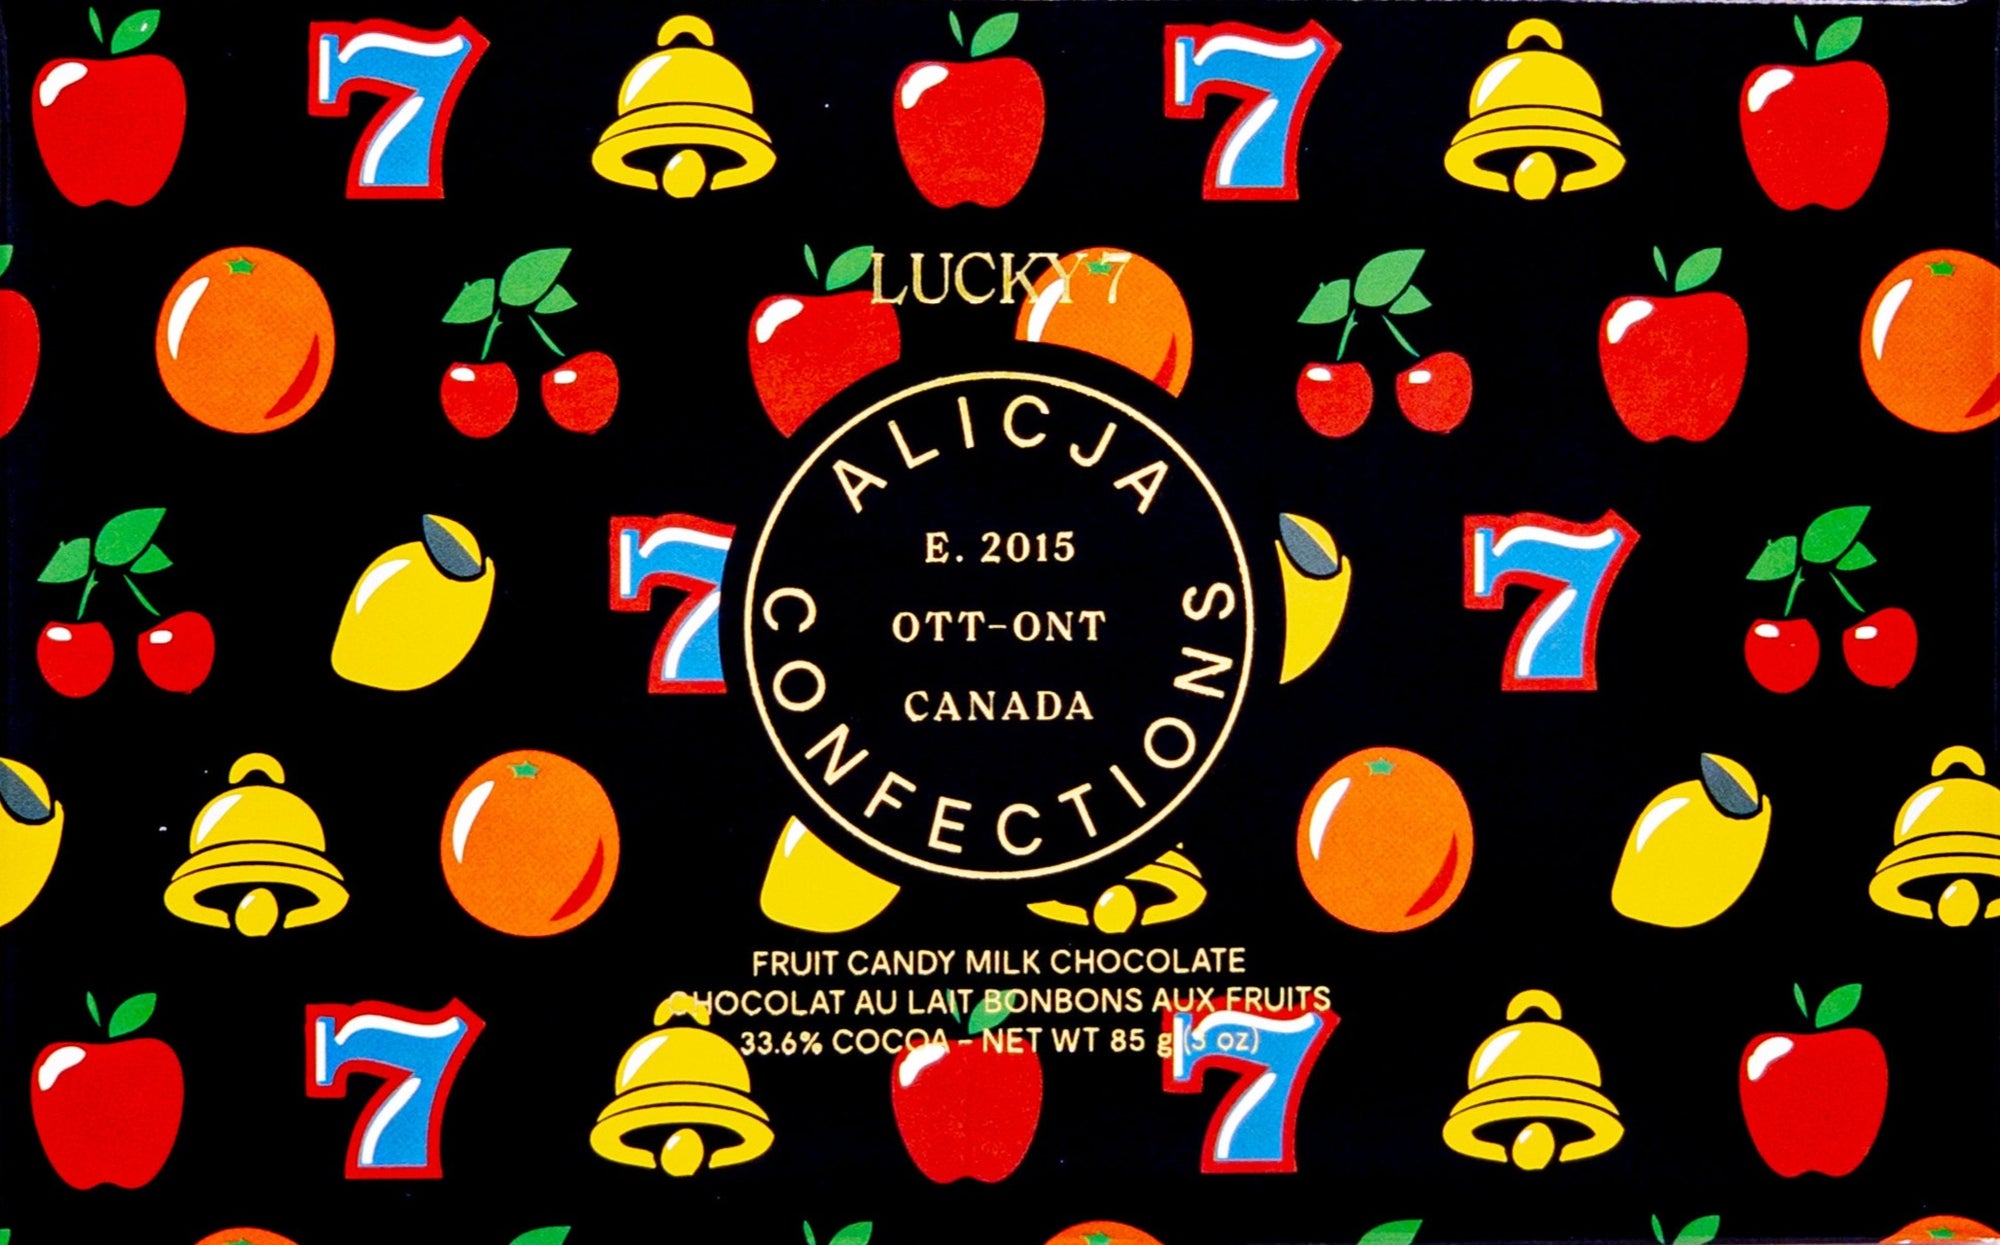 Lucky 7 • Fruit Candy 33.6% Milk Chocolate